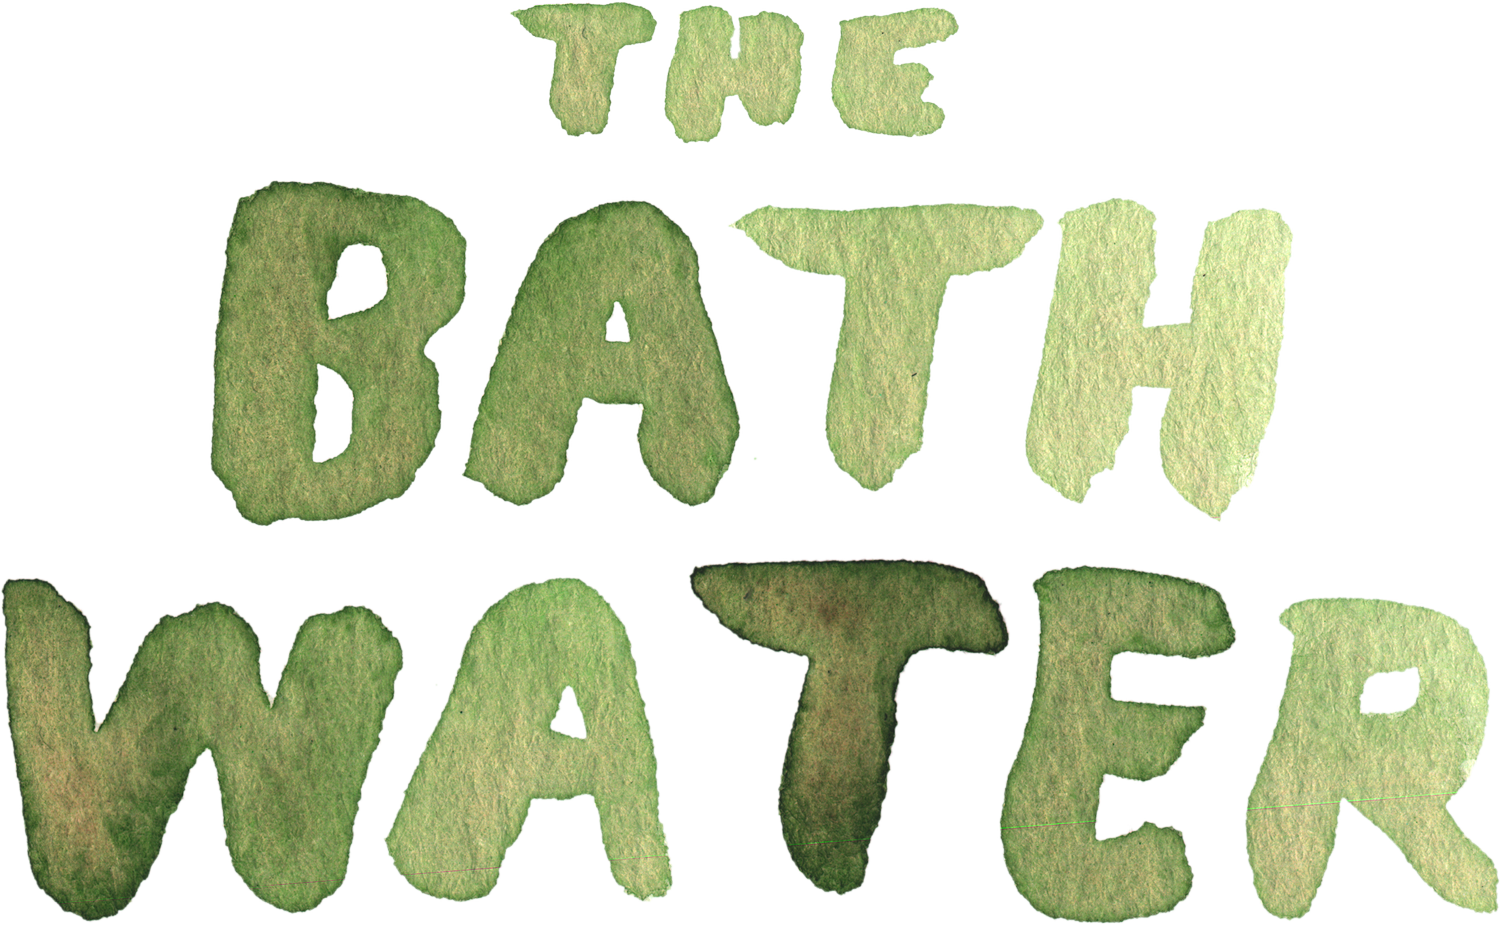 THE BATHWATER